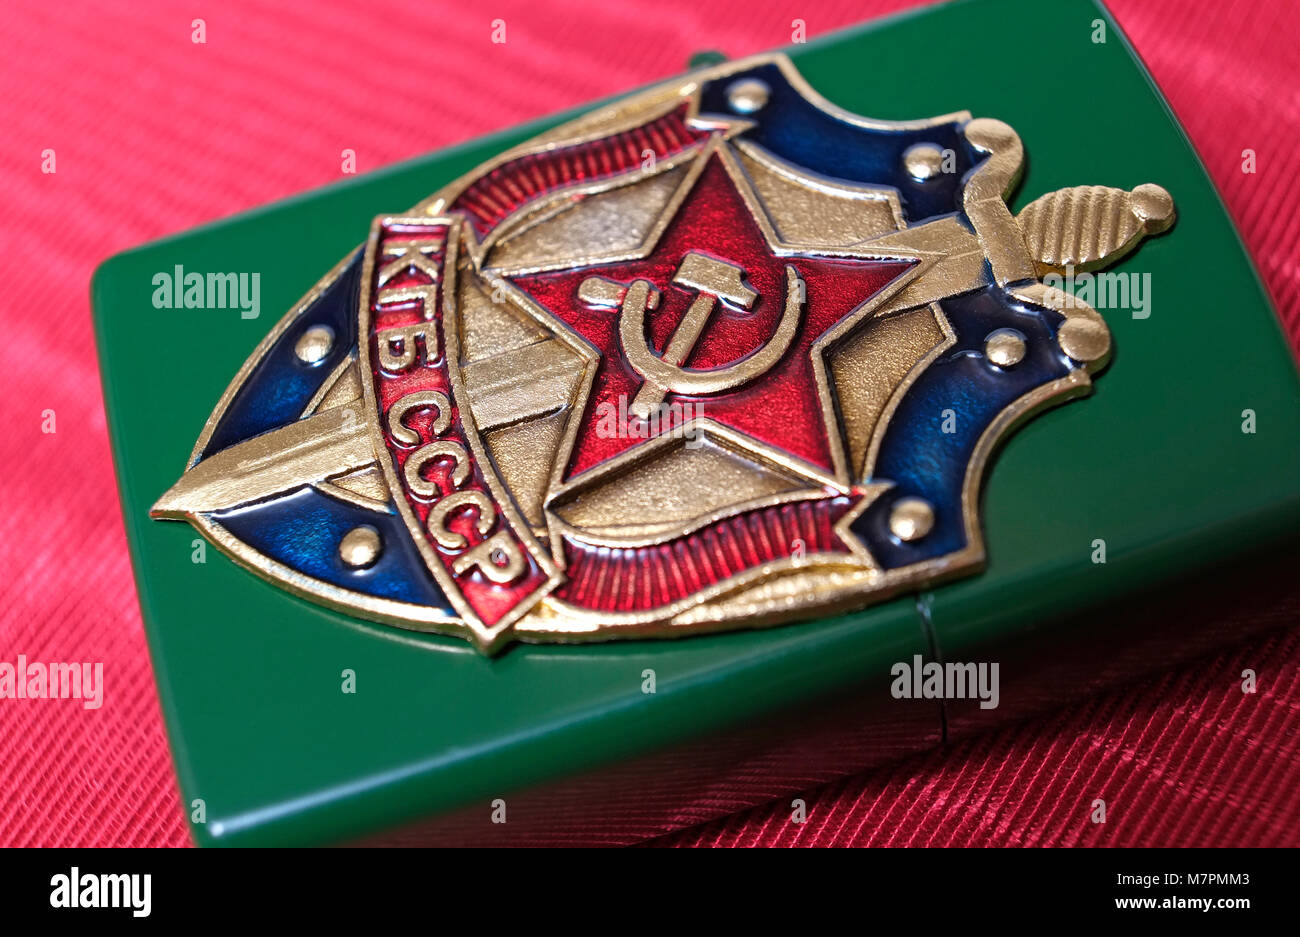 russian kgb badge on metal cigarette lighter Stock Photo